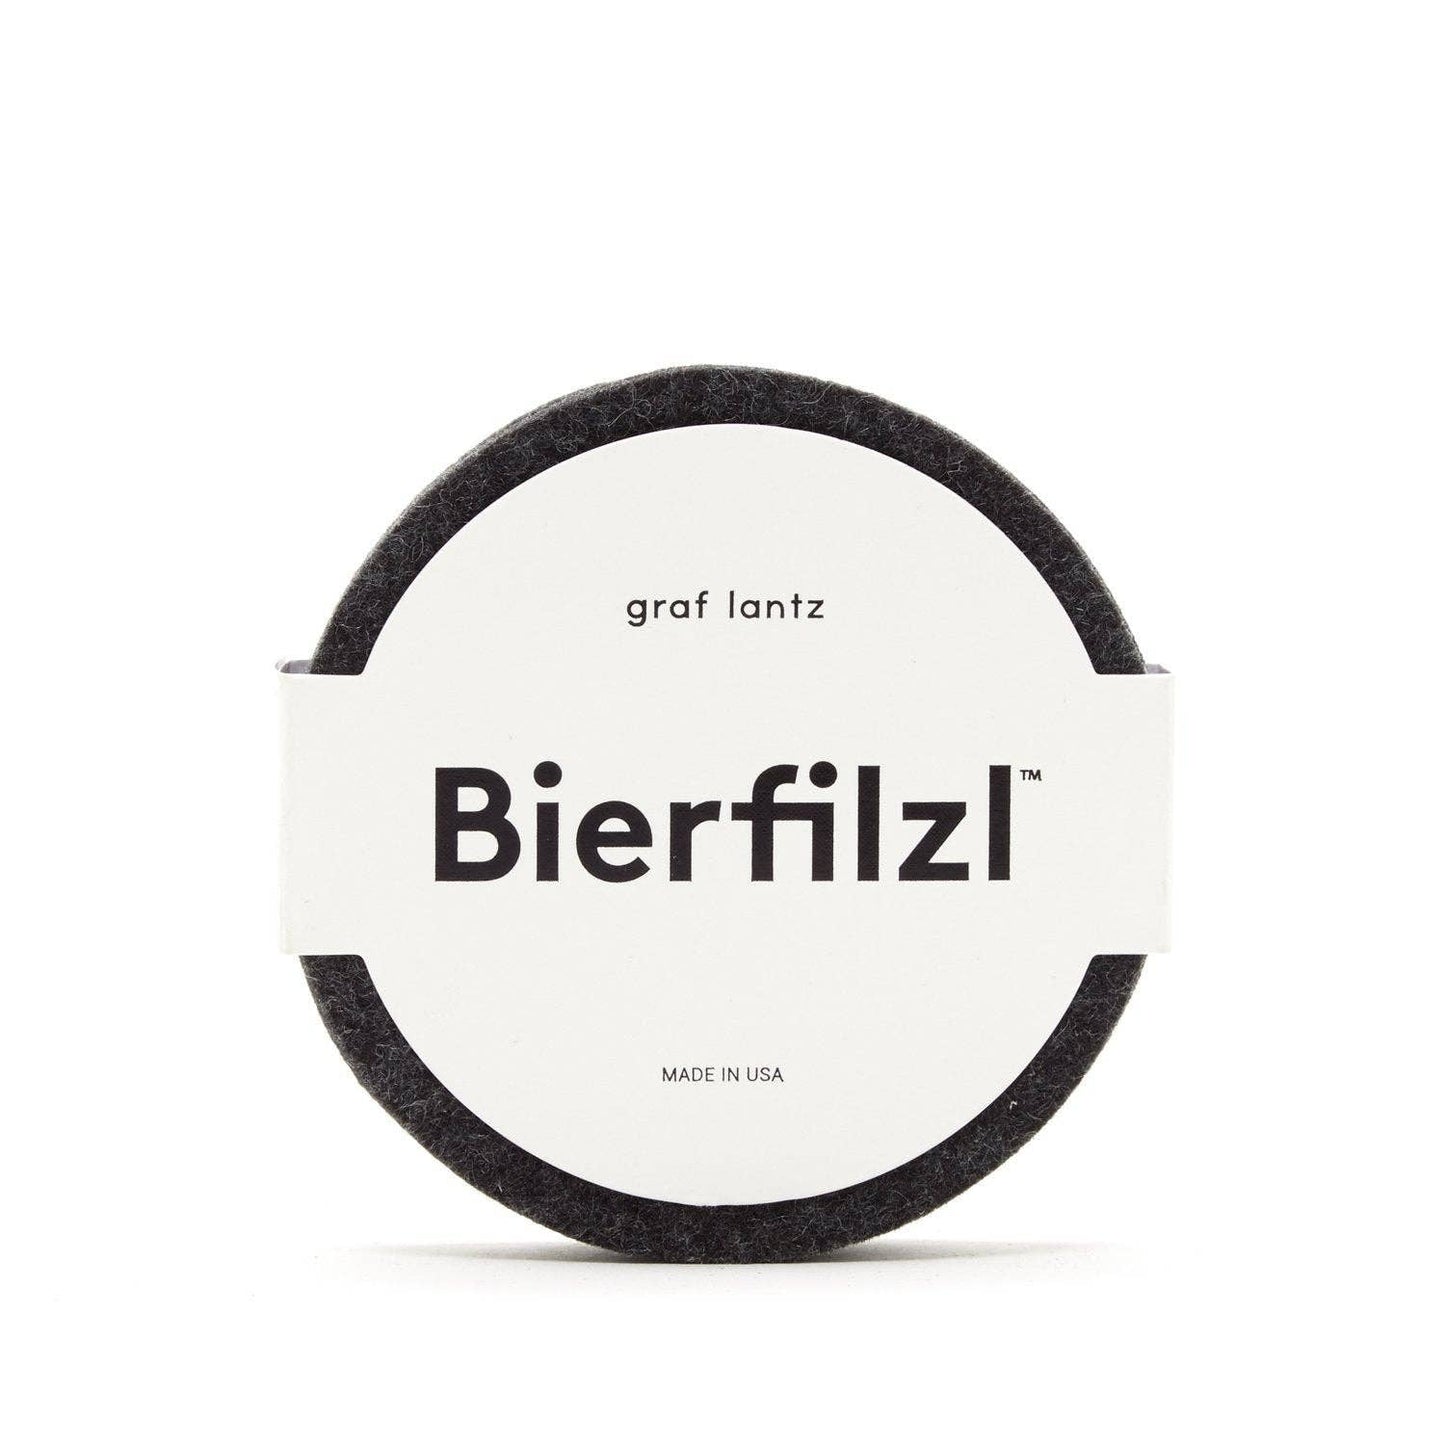 Bierfilzl Merino Wool Felt Round Coaster Solid 4 Pack: Charcoal